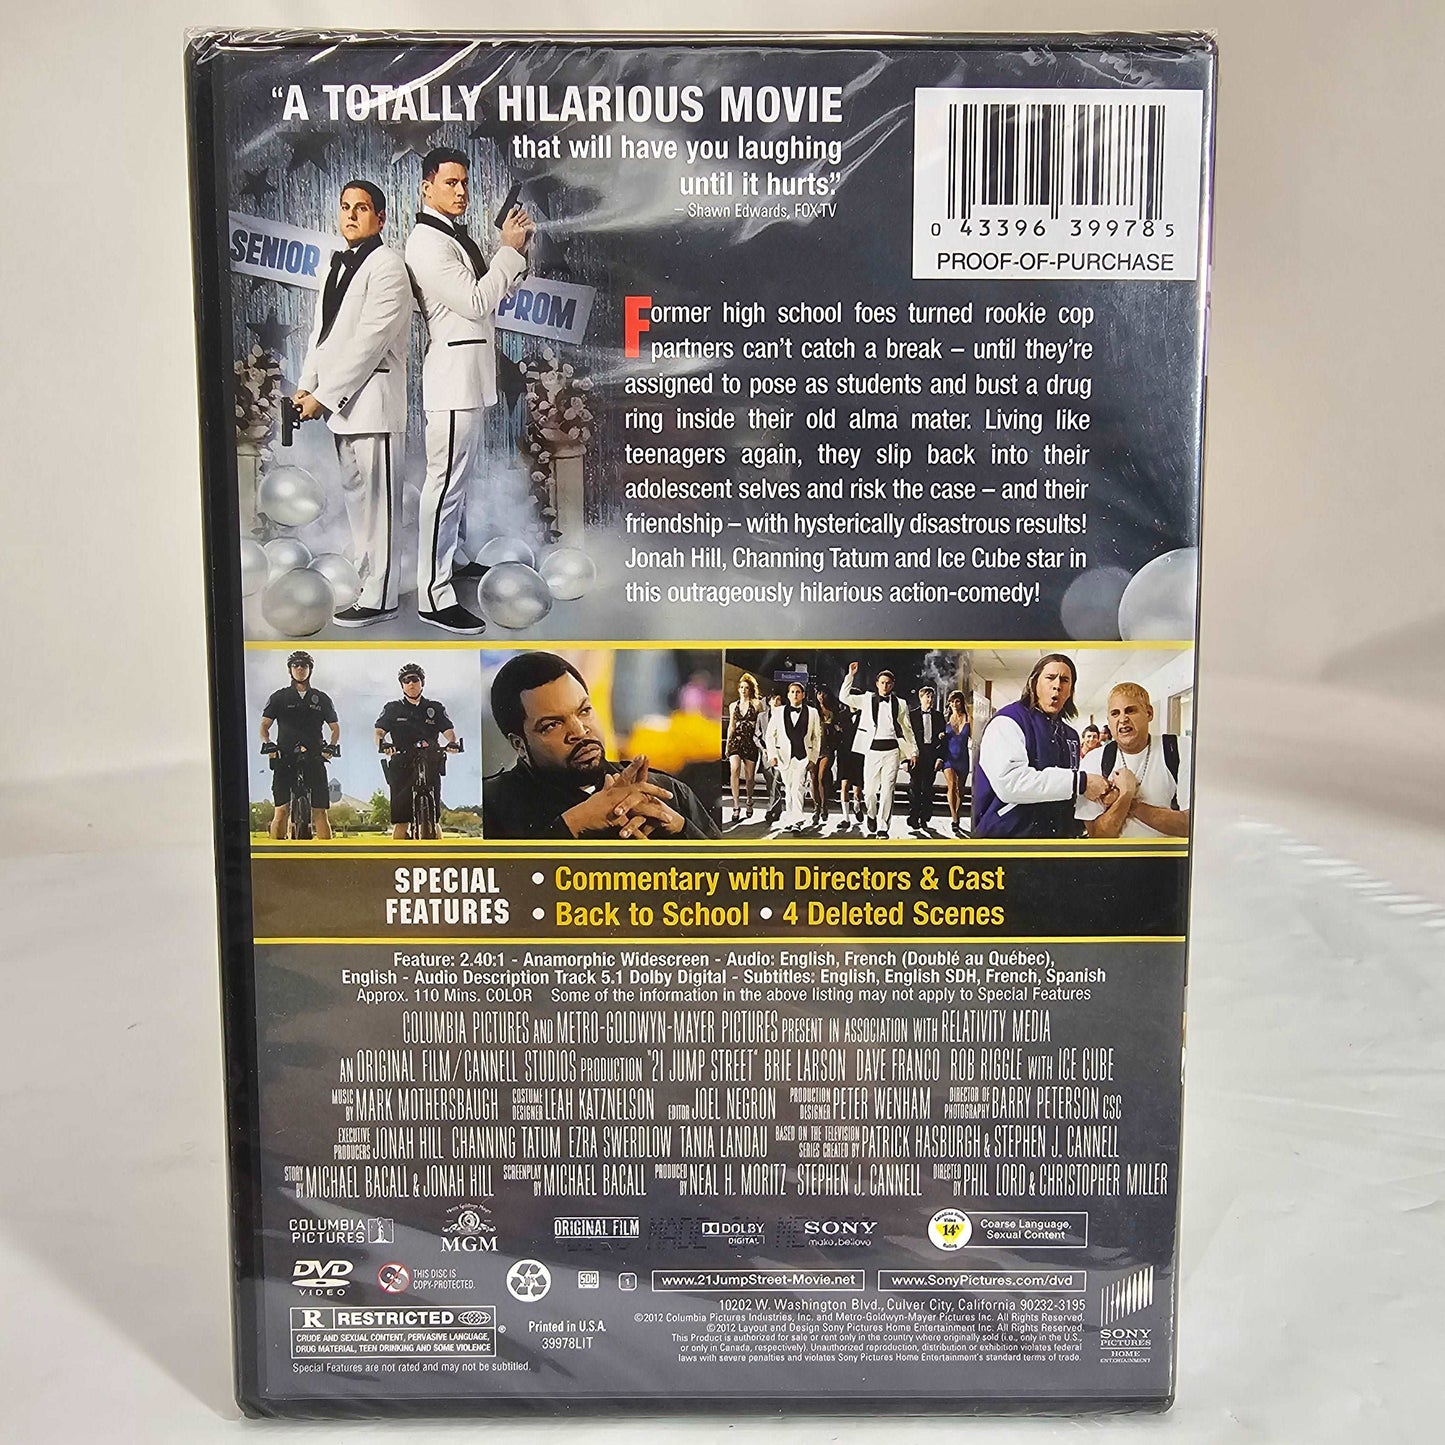 21 Jump Street DVD - DQ Distribution